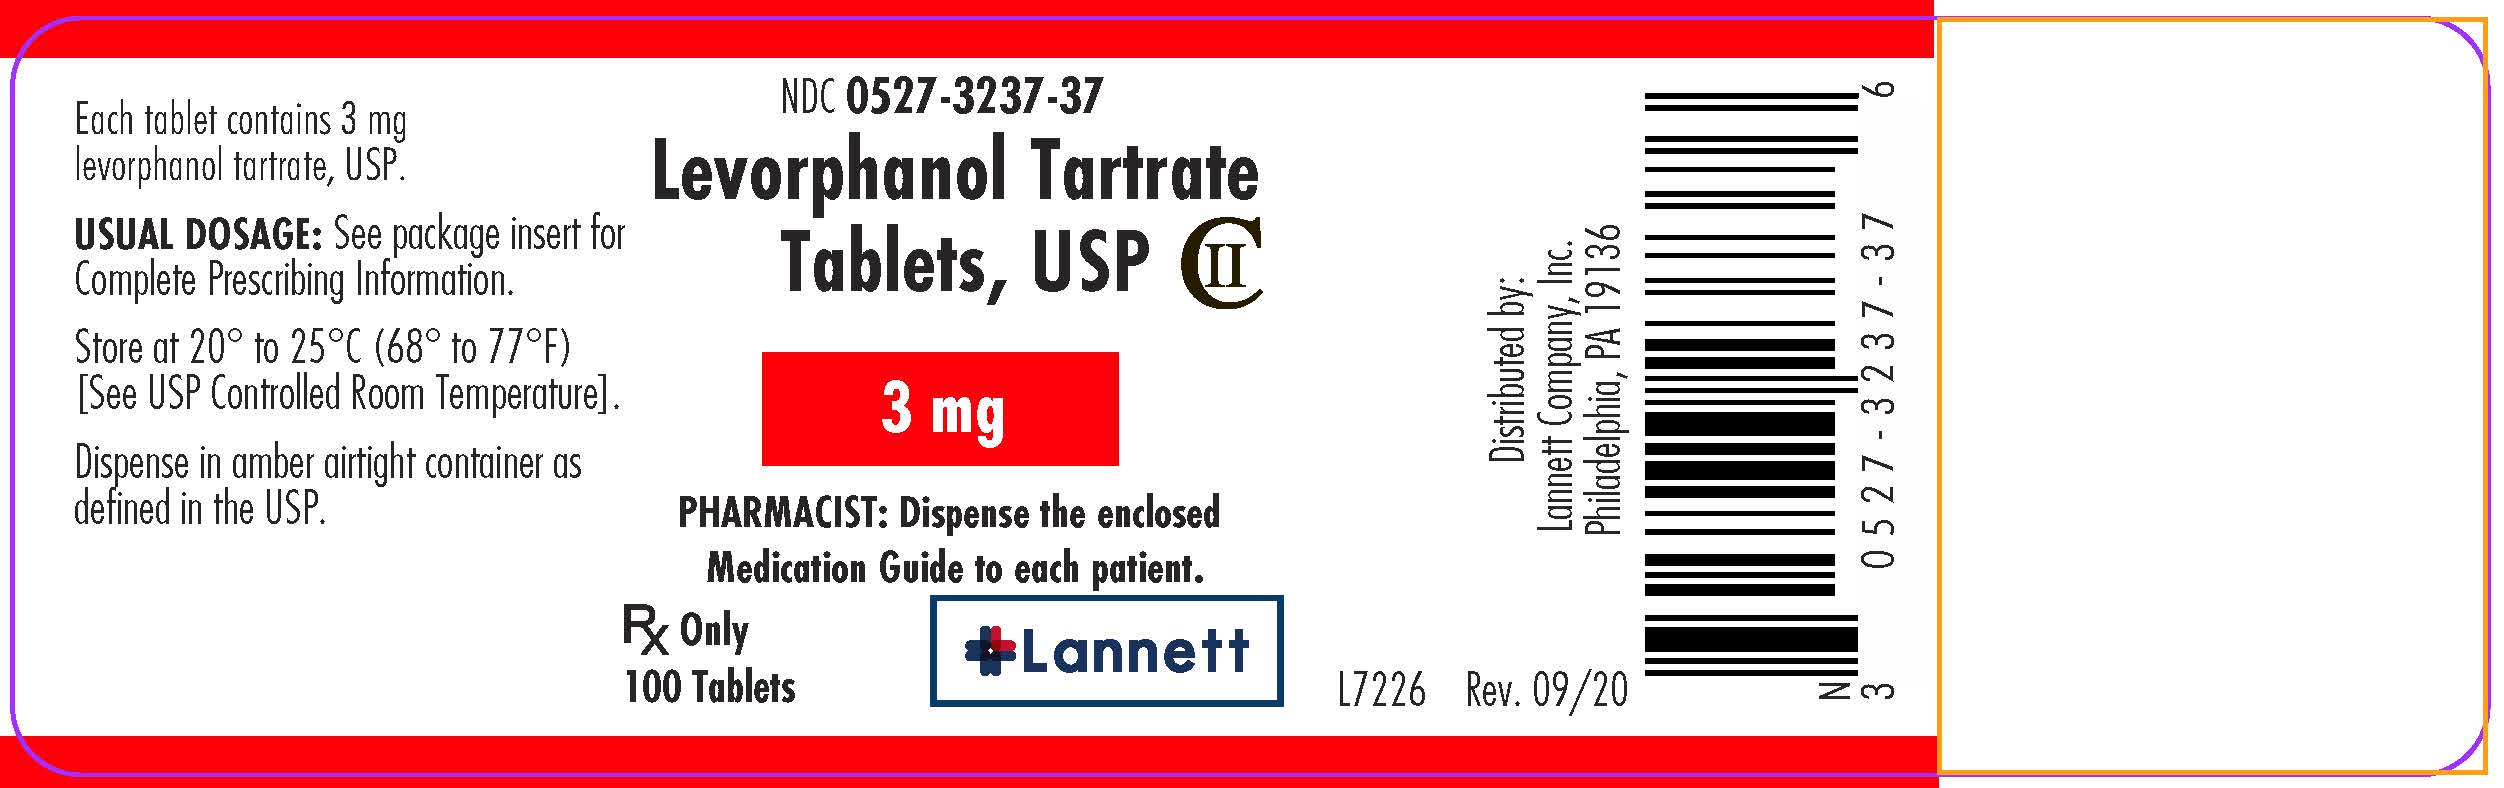 3 mg bottle label